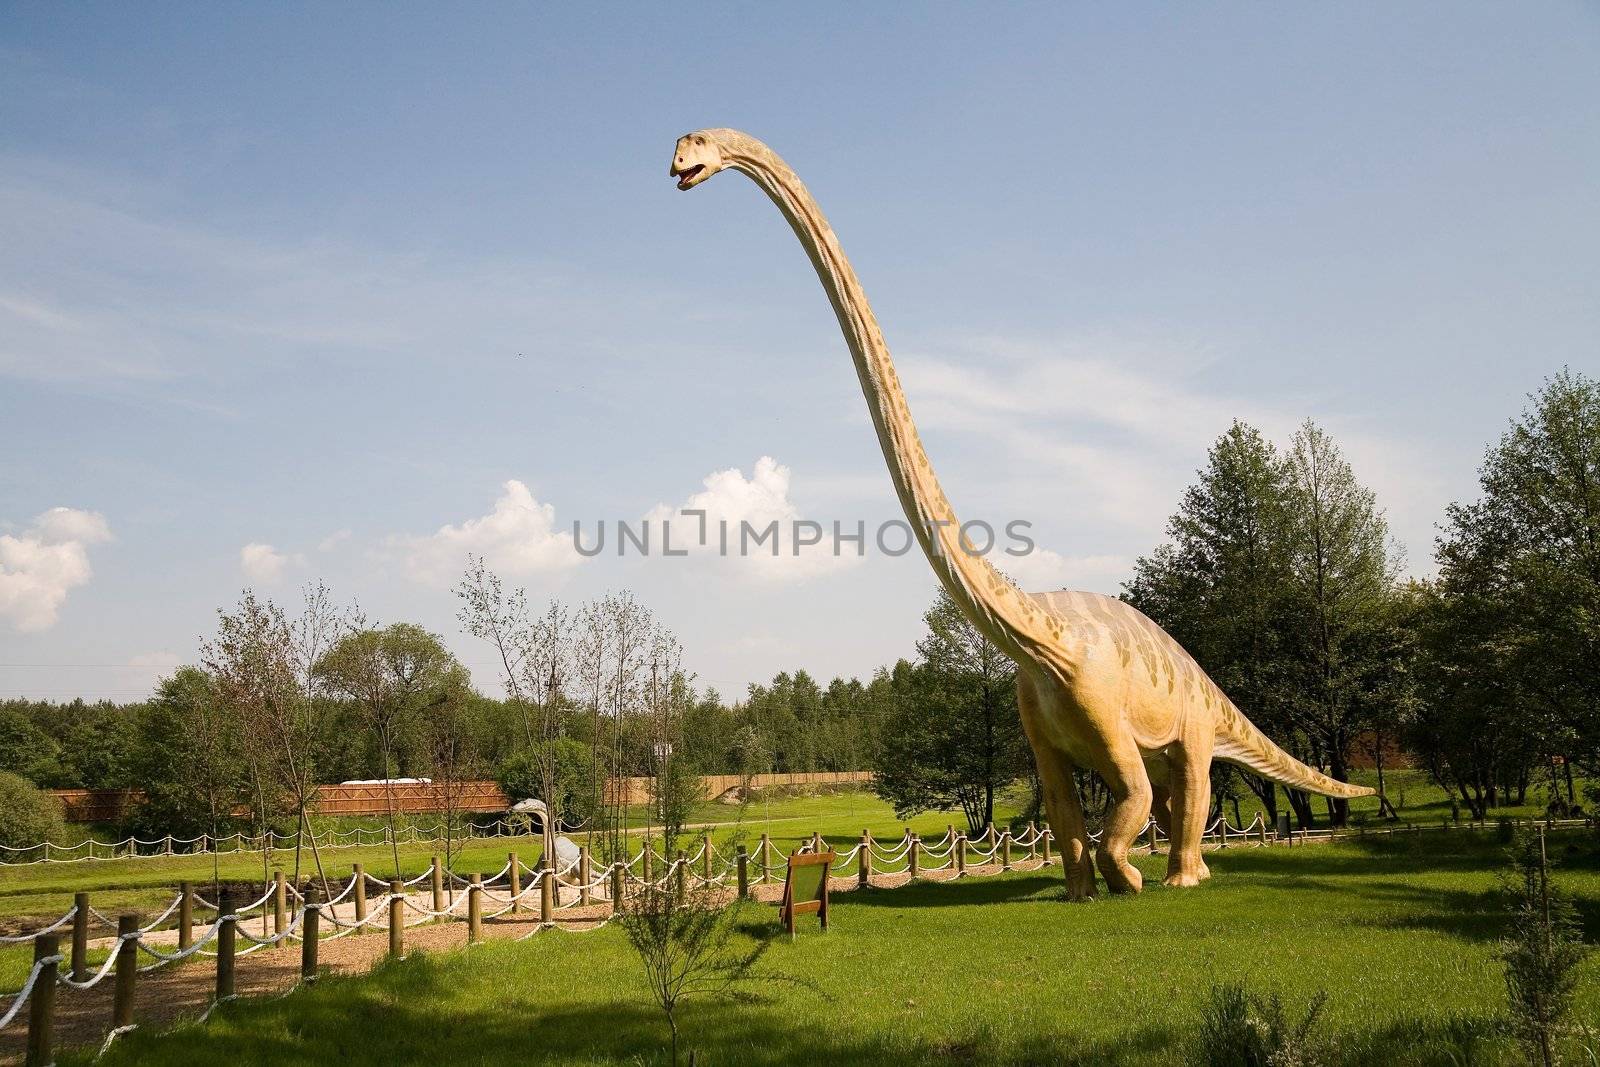 Jurassic park - set of dinosaurs - Mamenchisaurus constructus